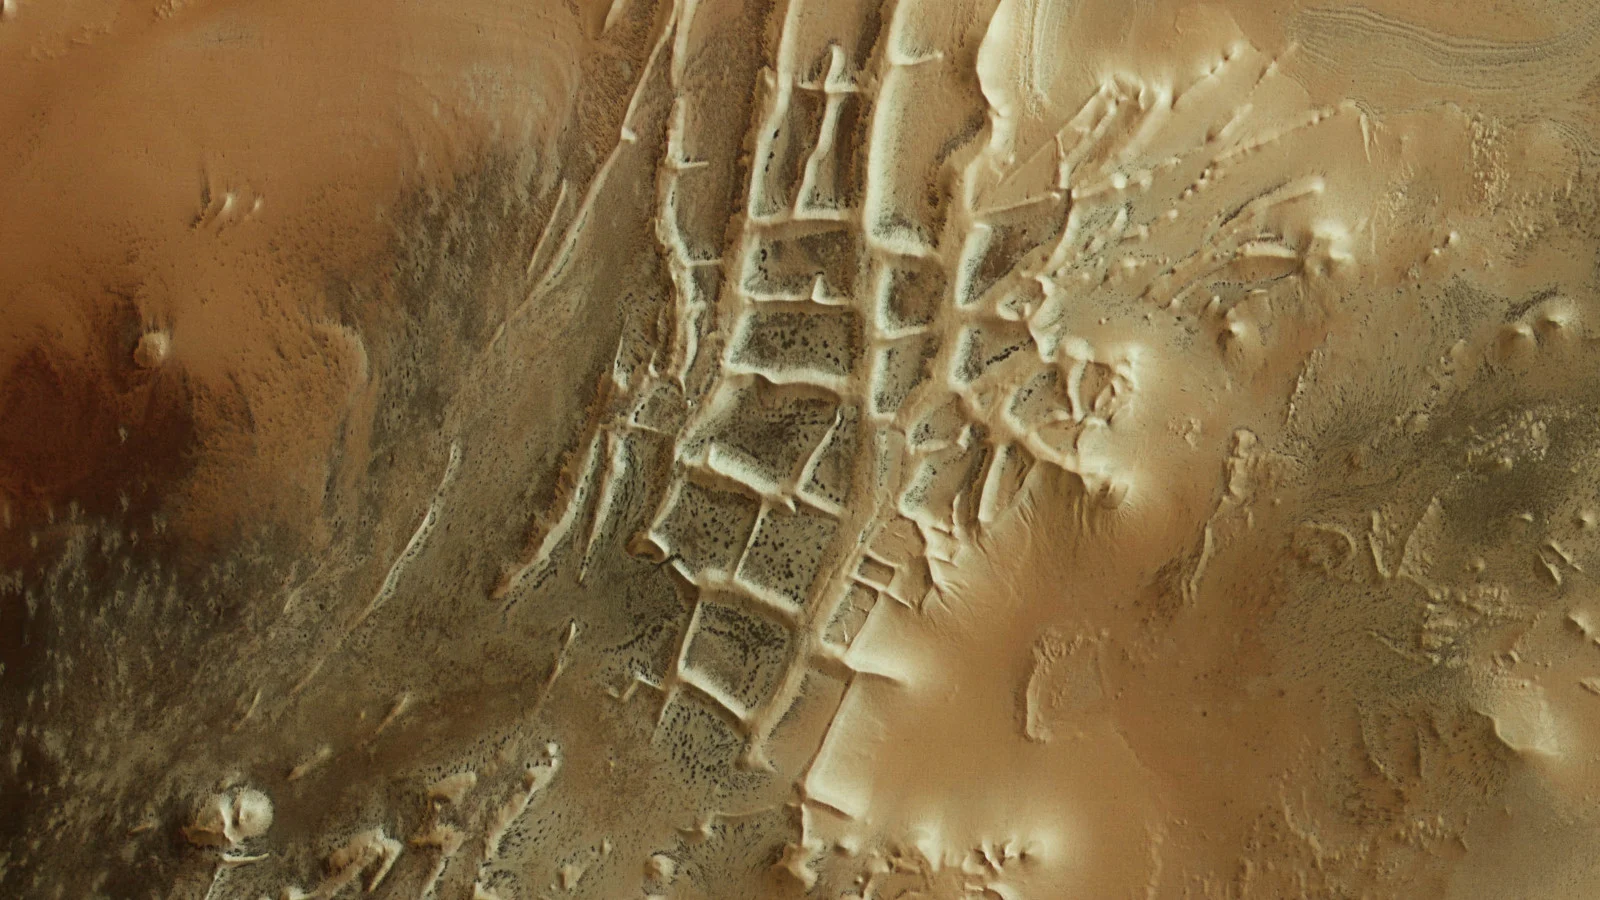 Mars-Inca-City-Mars-Express-ESA